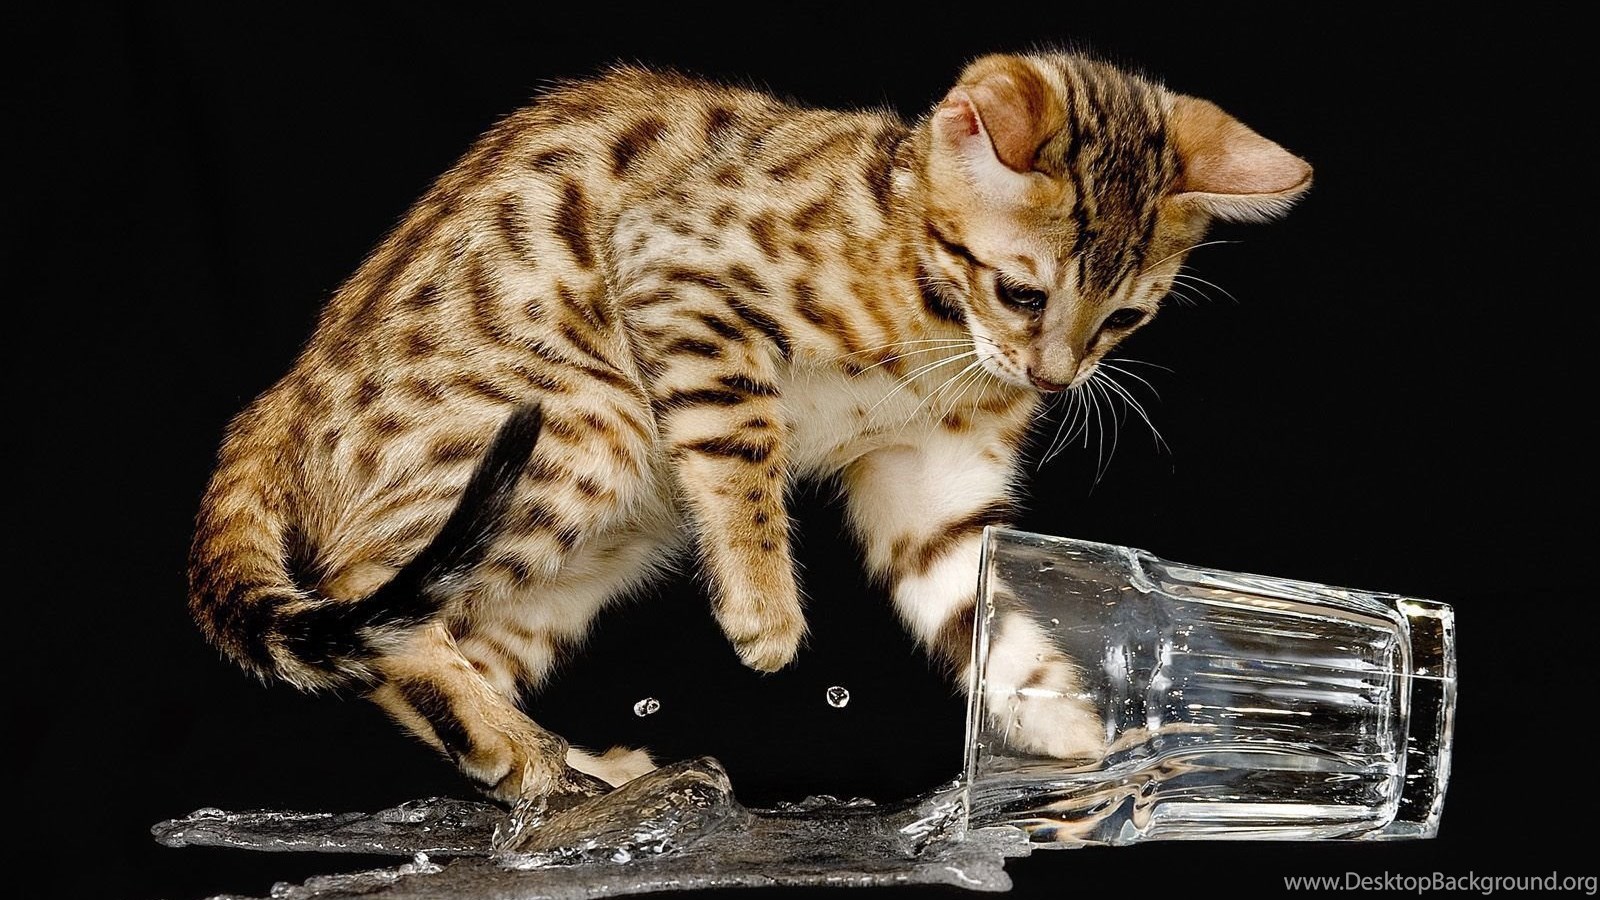 Bengal Cat Spilled Water Wallpaper And Image Wallpaper. Desktop Background